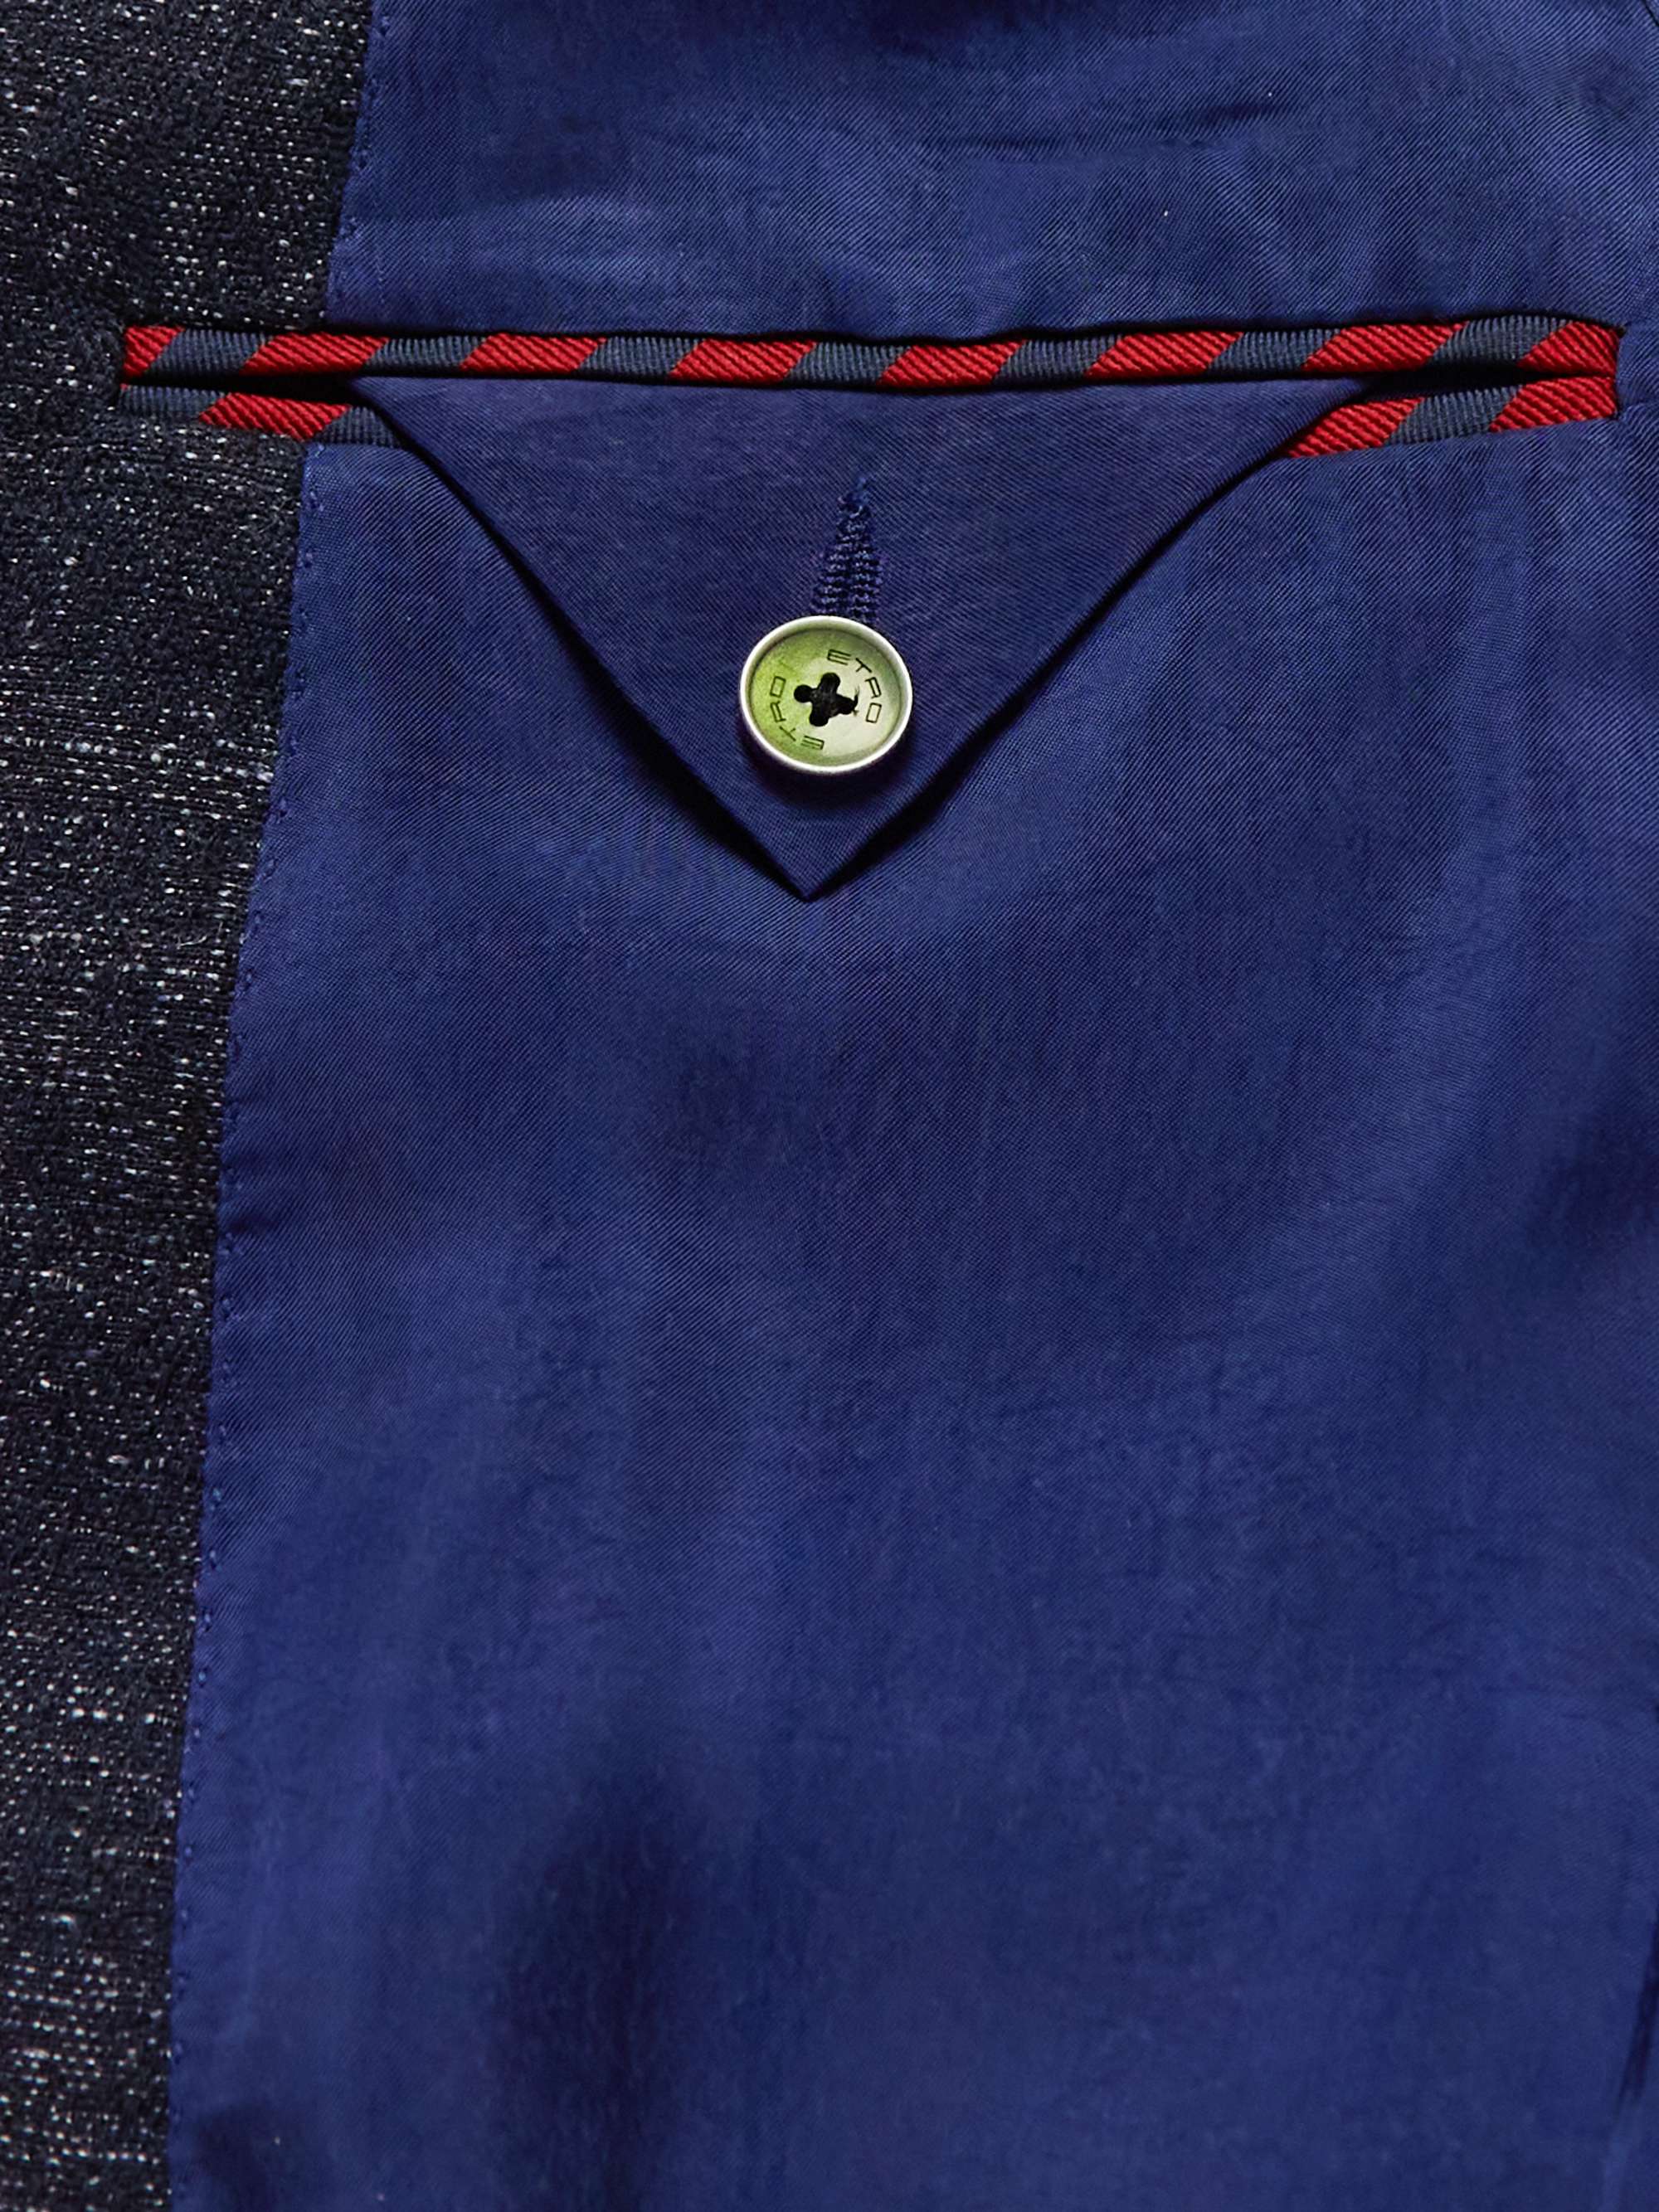 ETRO Cotton, Wool and Linen-Blend Jacquard Blazer